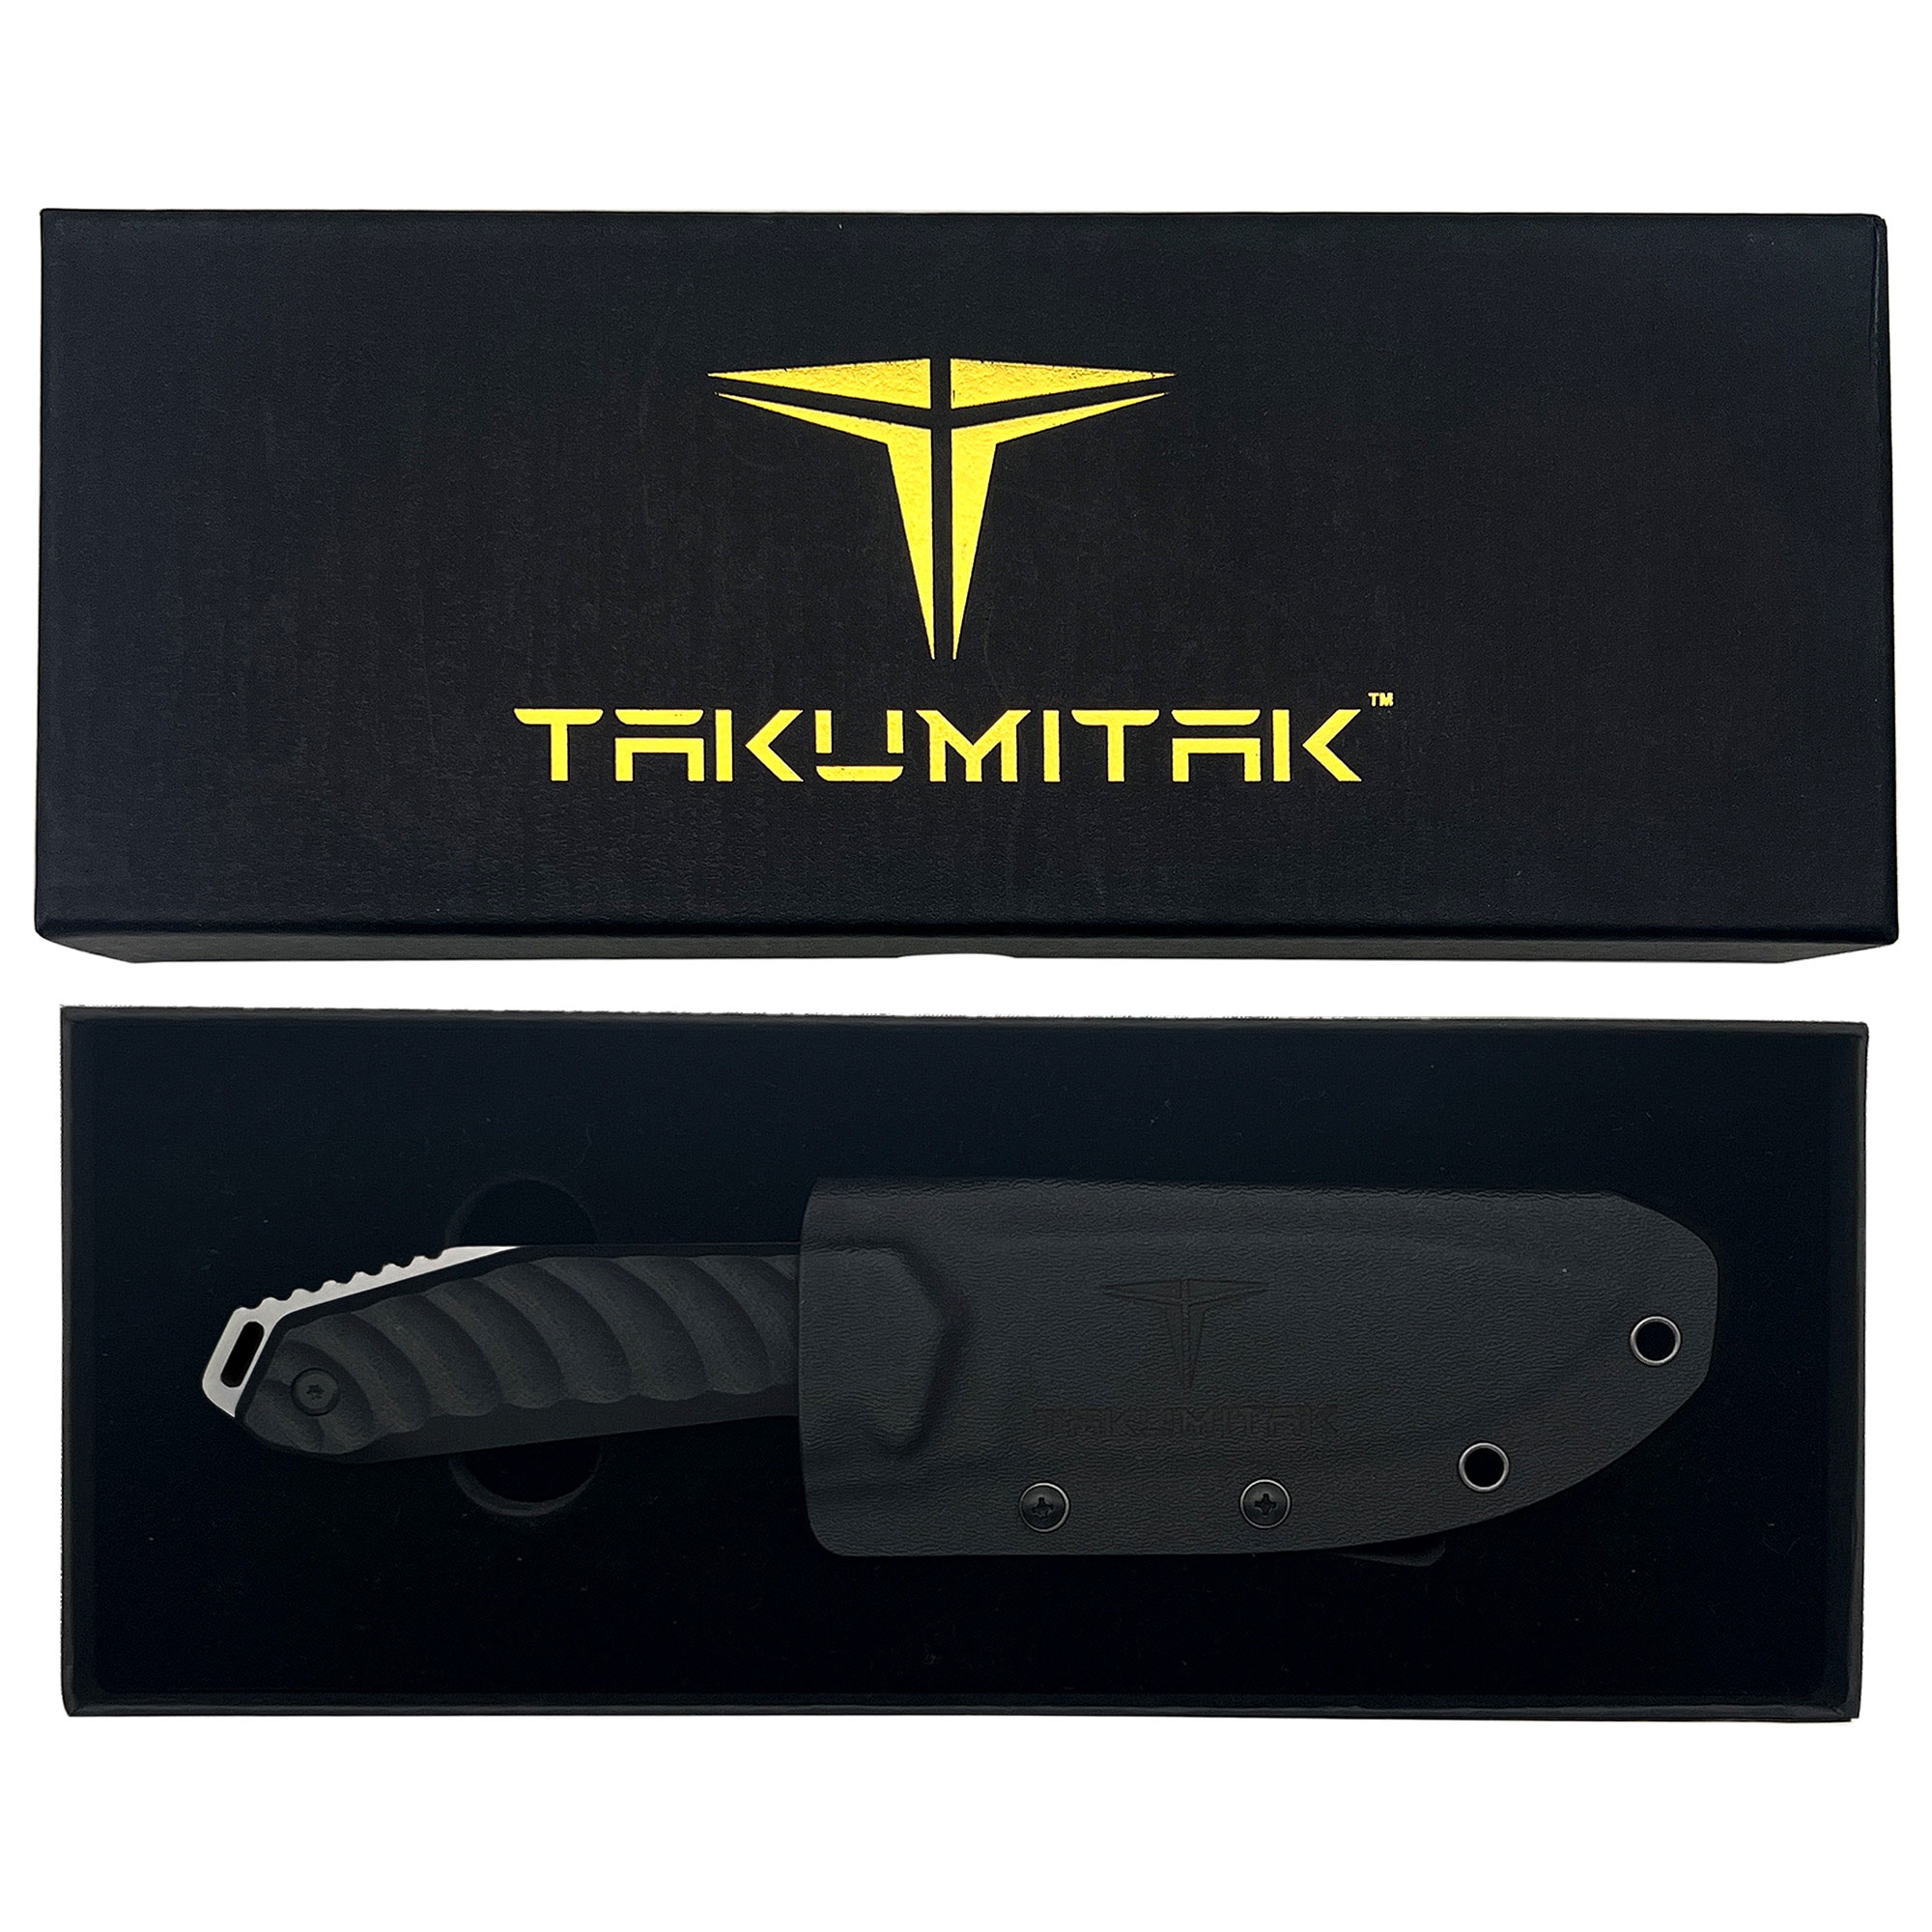 Ніж Takumitak Takumi - Black/Silver